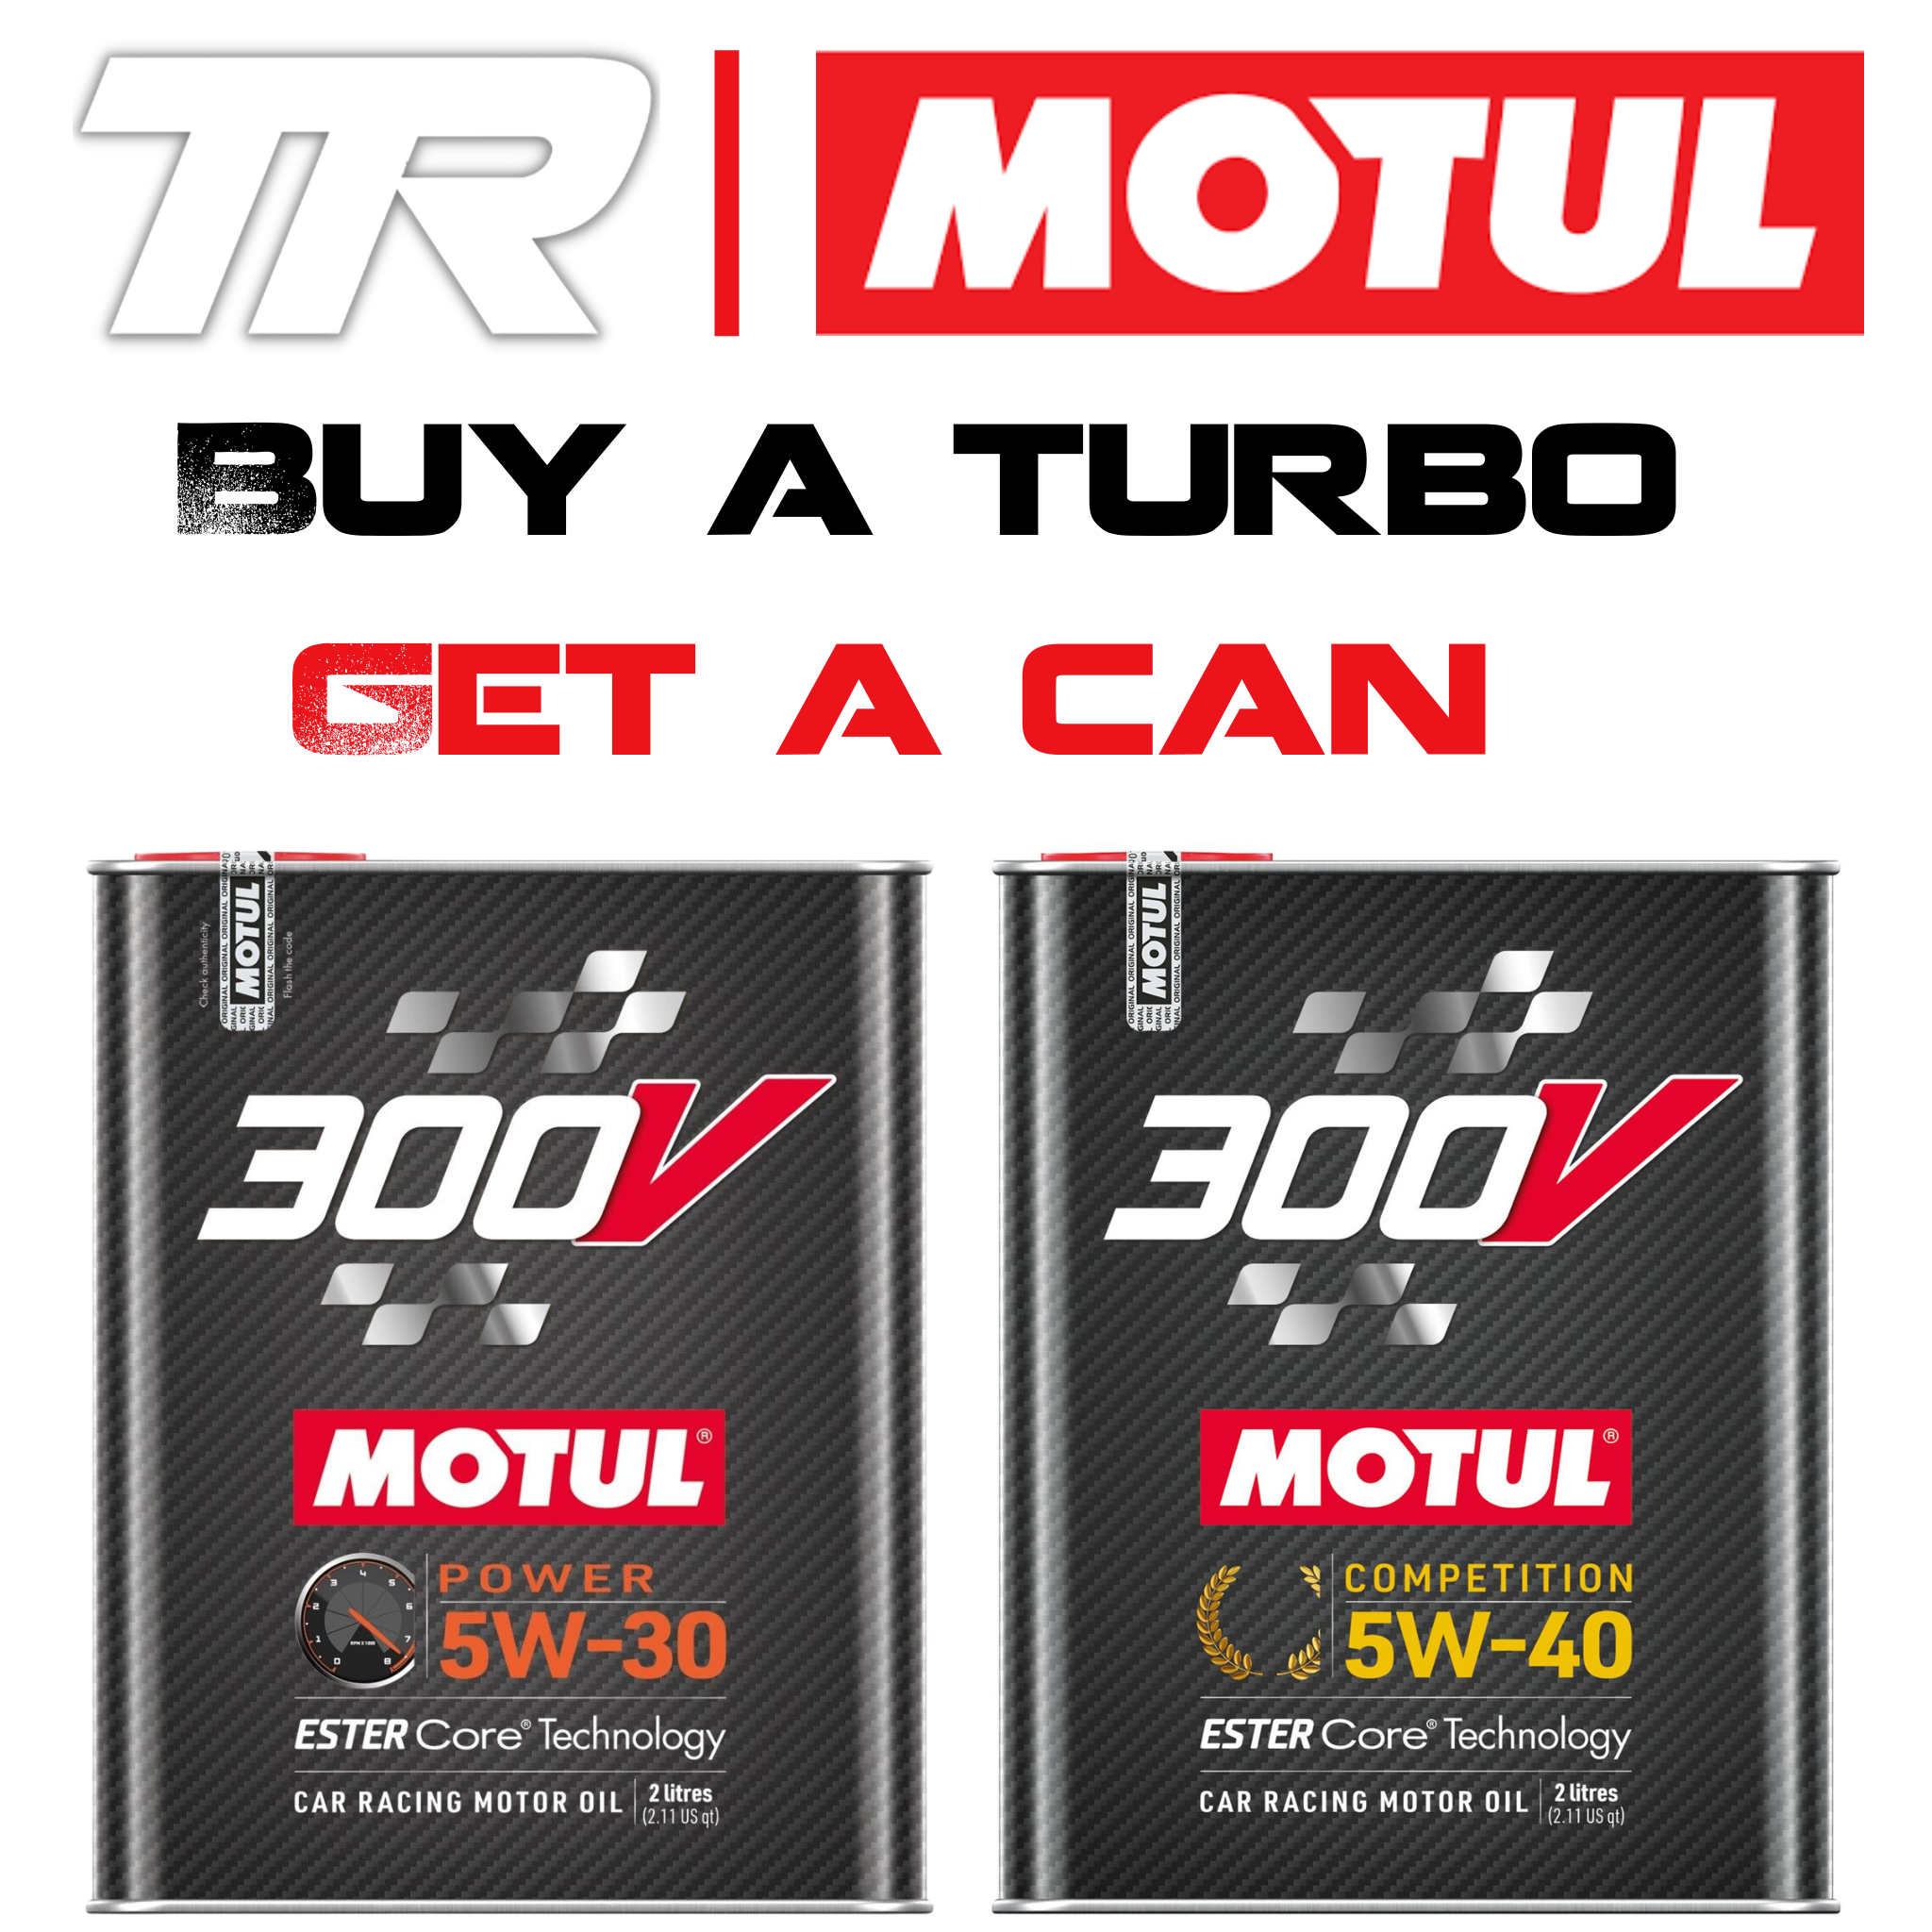 TR Sigma Turbo for Mitsubishi Evolution X and Motul 300V Power &  Competition